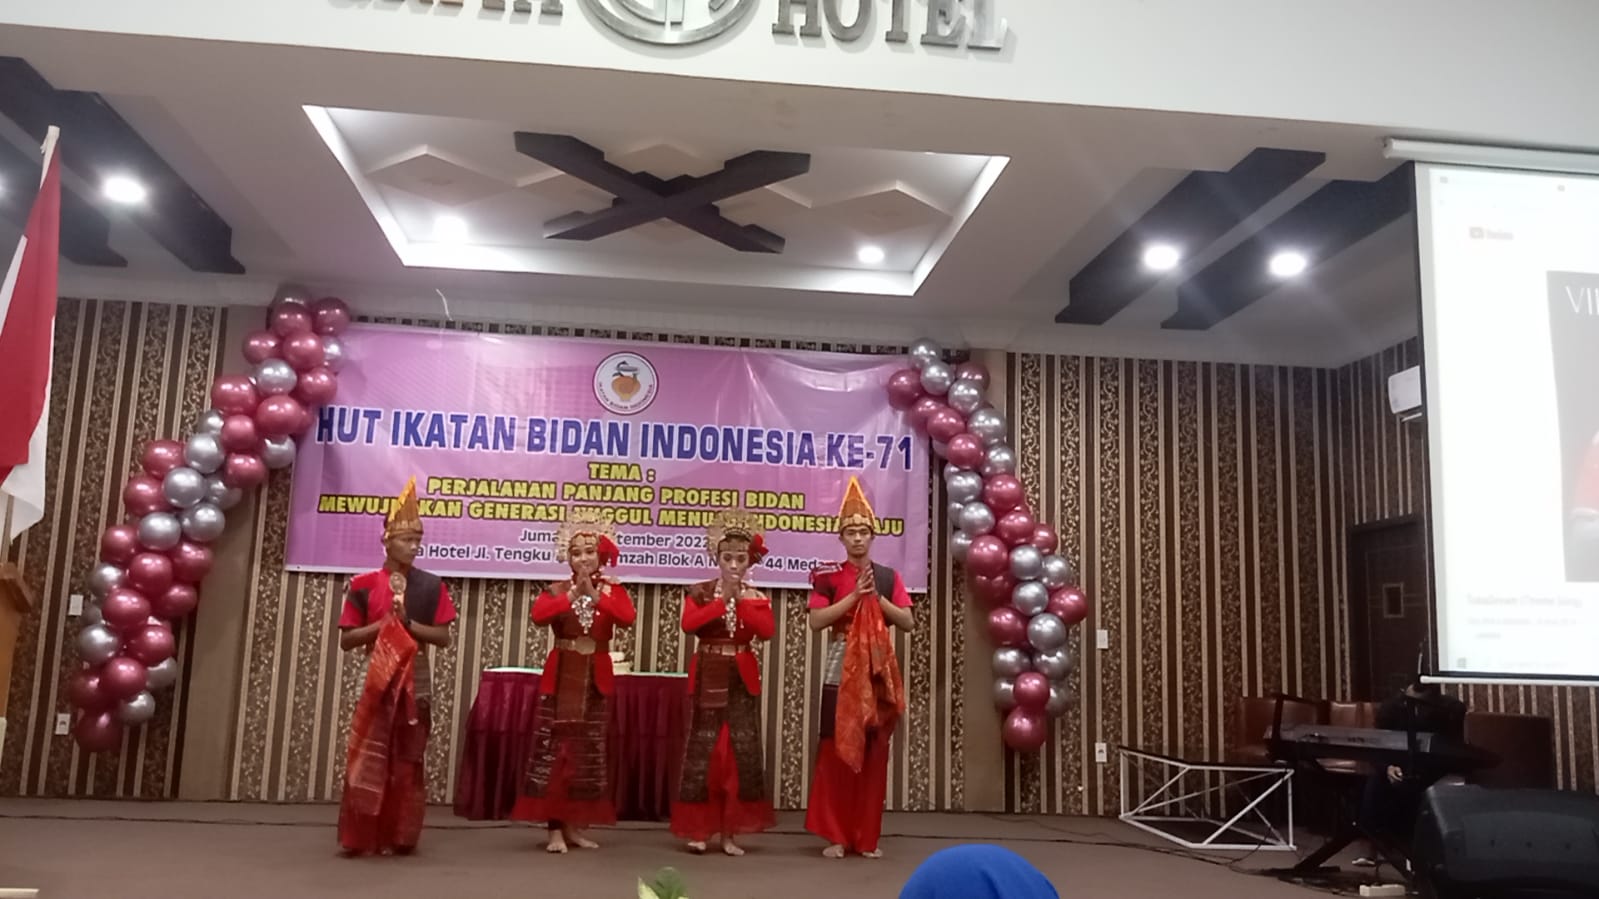 Mahasiswa STIKes Mitra Husada Medan Terpilih untuk memberikan Tarian Persembahan Pada Acara Hari Ulang Tahun IKATAN BIDAN INDONESIA YANG KE-71.